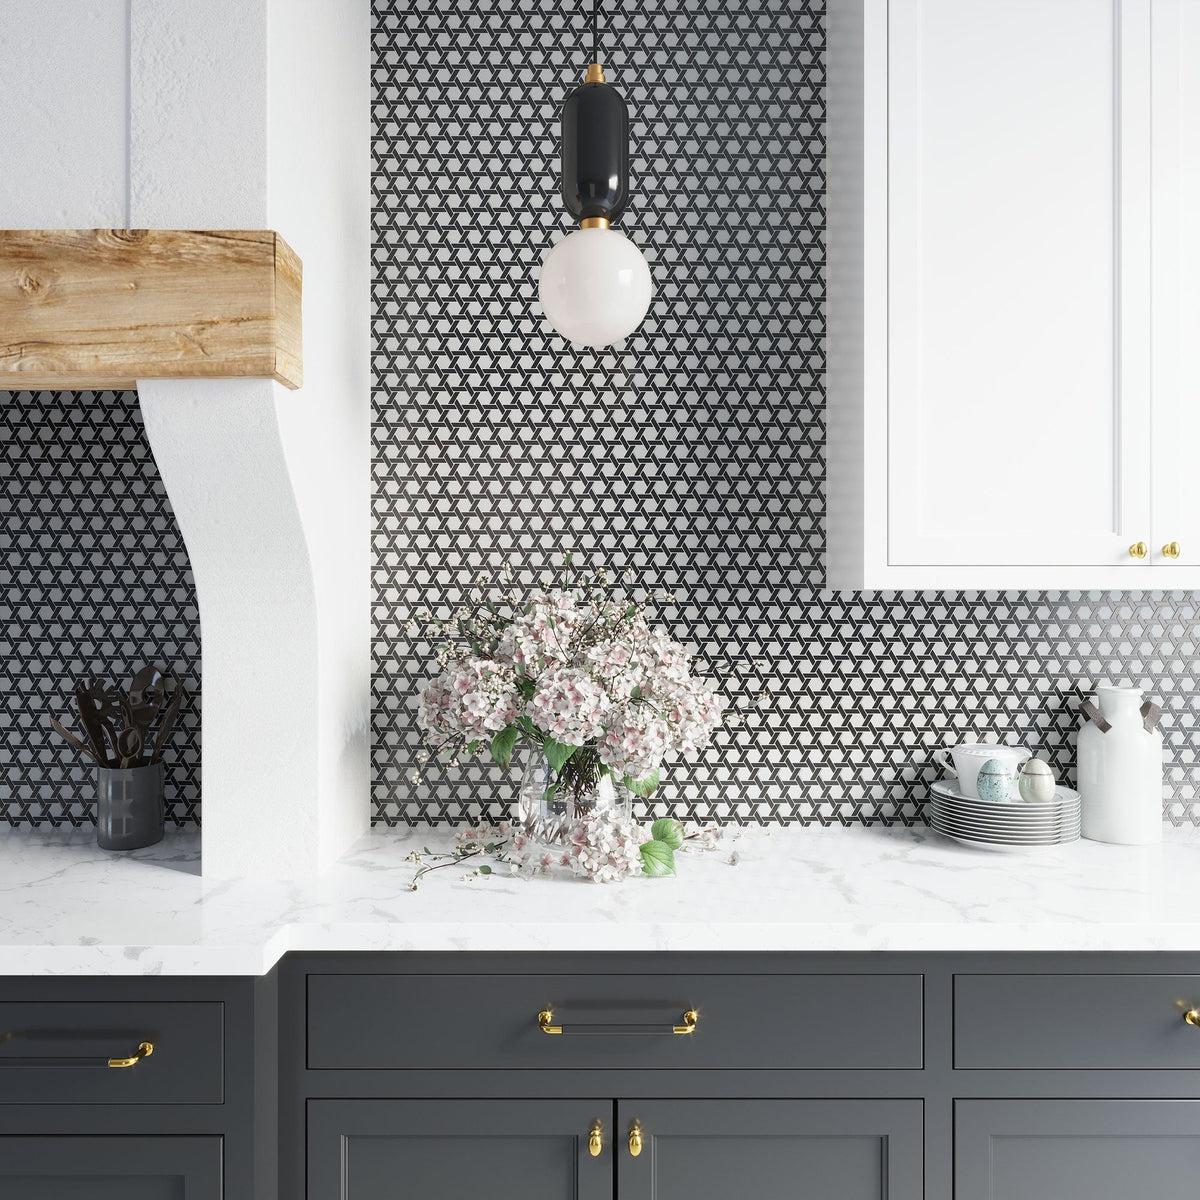 Graphite and White Kitchen with Glass Mosaic Tile Backsplash